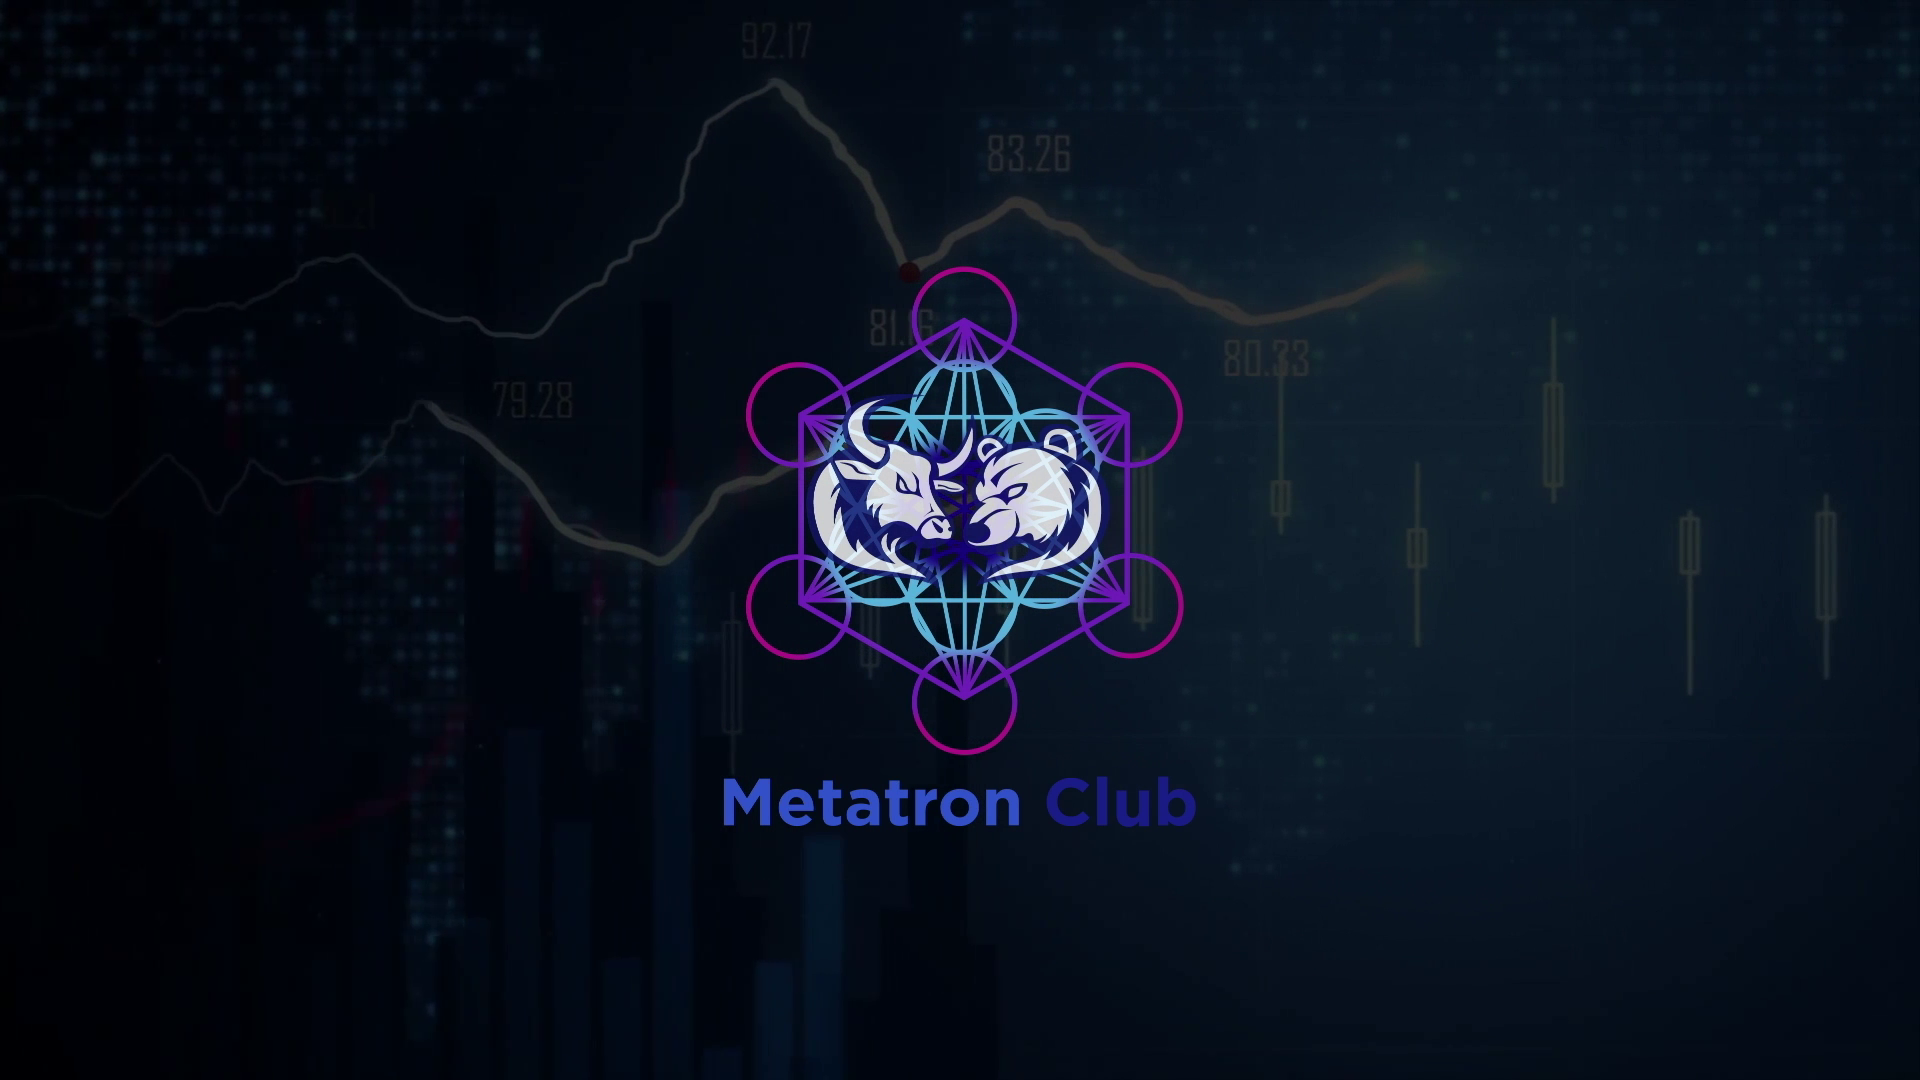 Lancio nuovo protocollo MetatronClub anno 2022